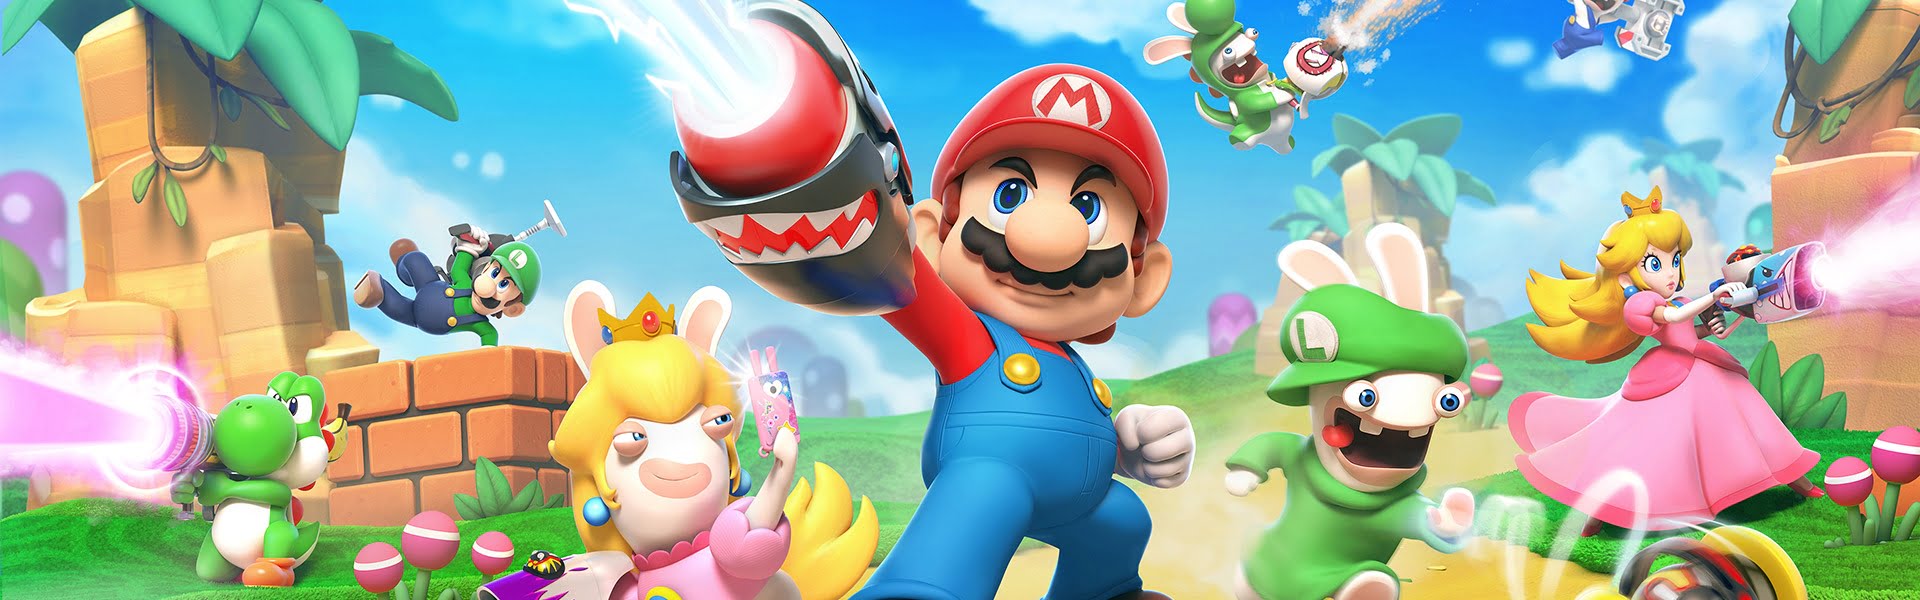 Mario + Rabbids: Kingdom Battle Review 13